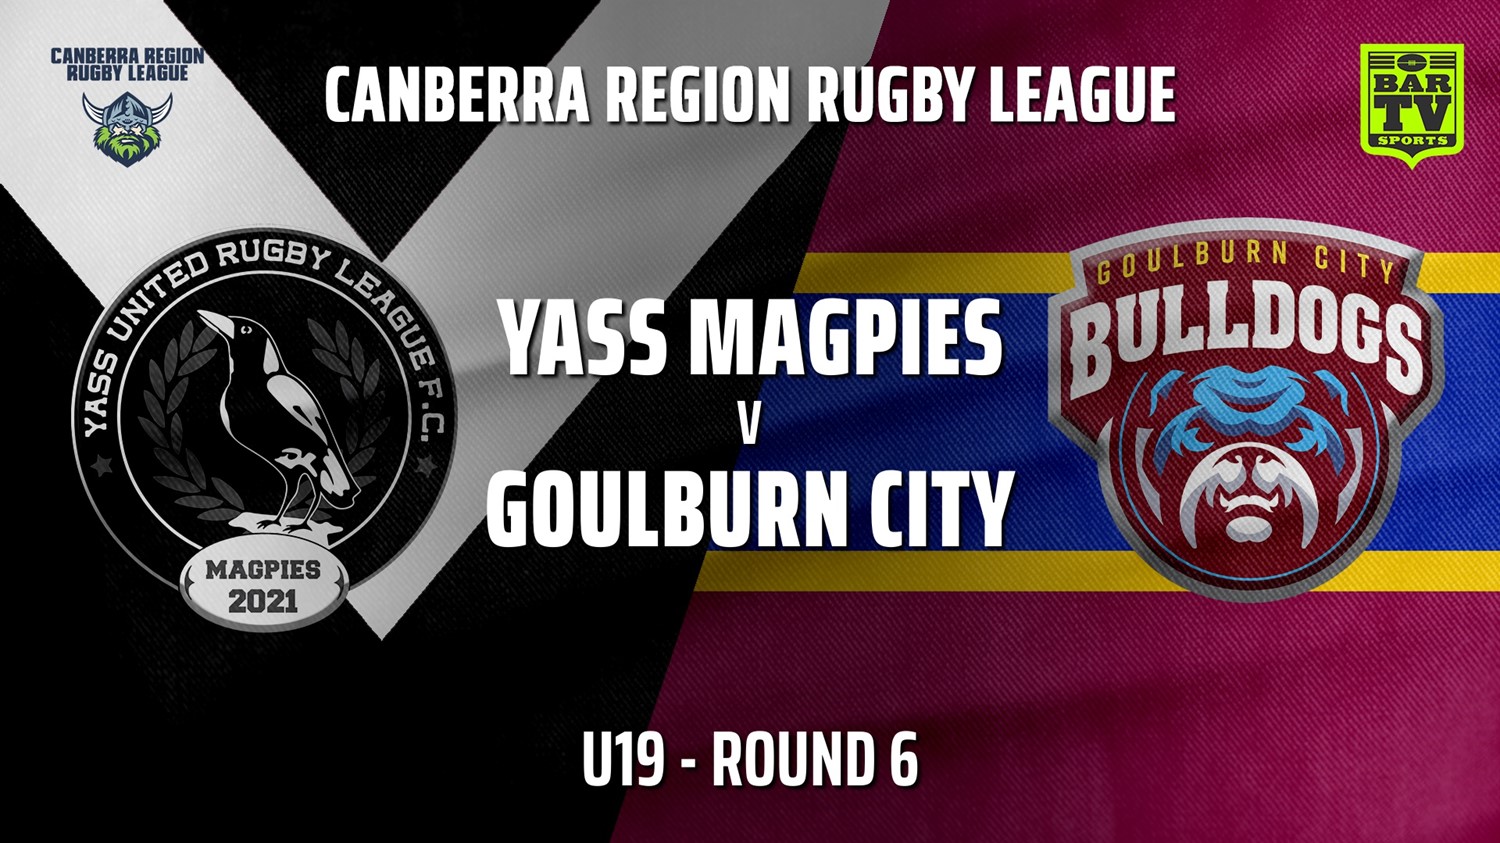 210605-CRRL Round 6 - U19 - Yass Magpies v Goulburn City Bulldogs Slate Image